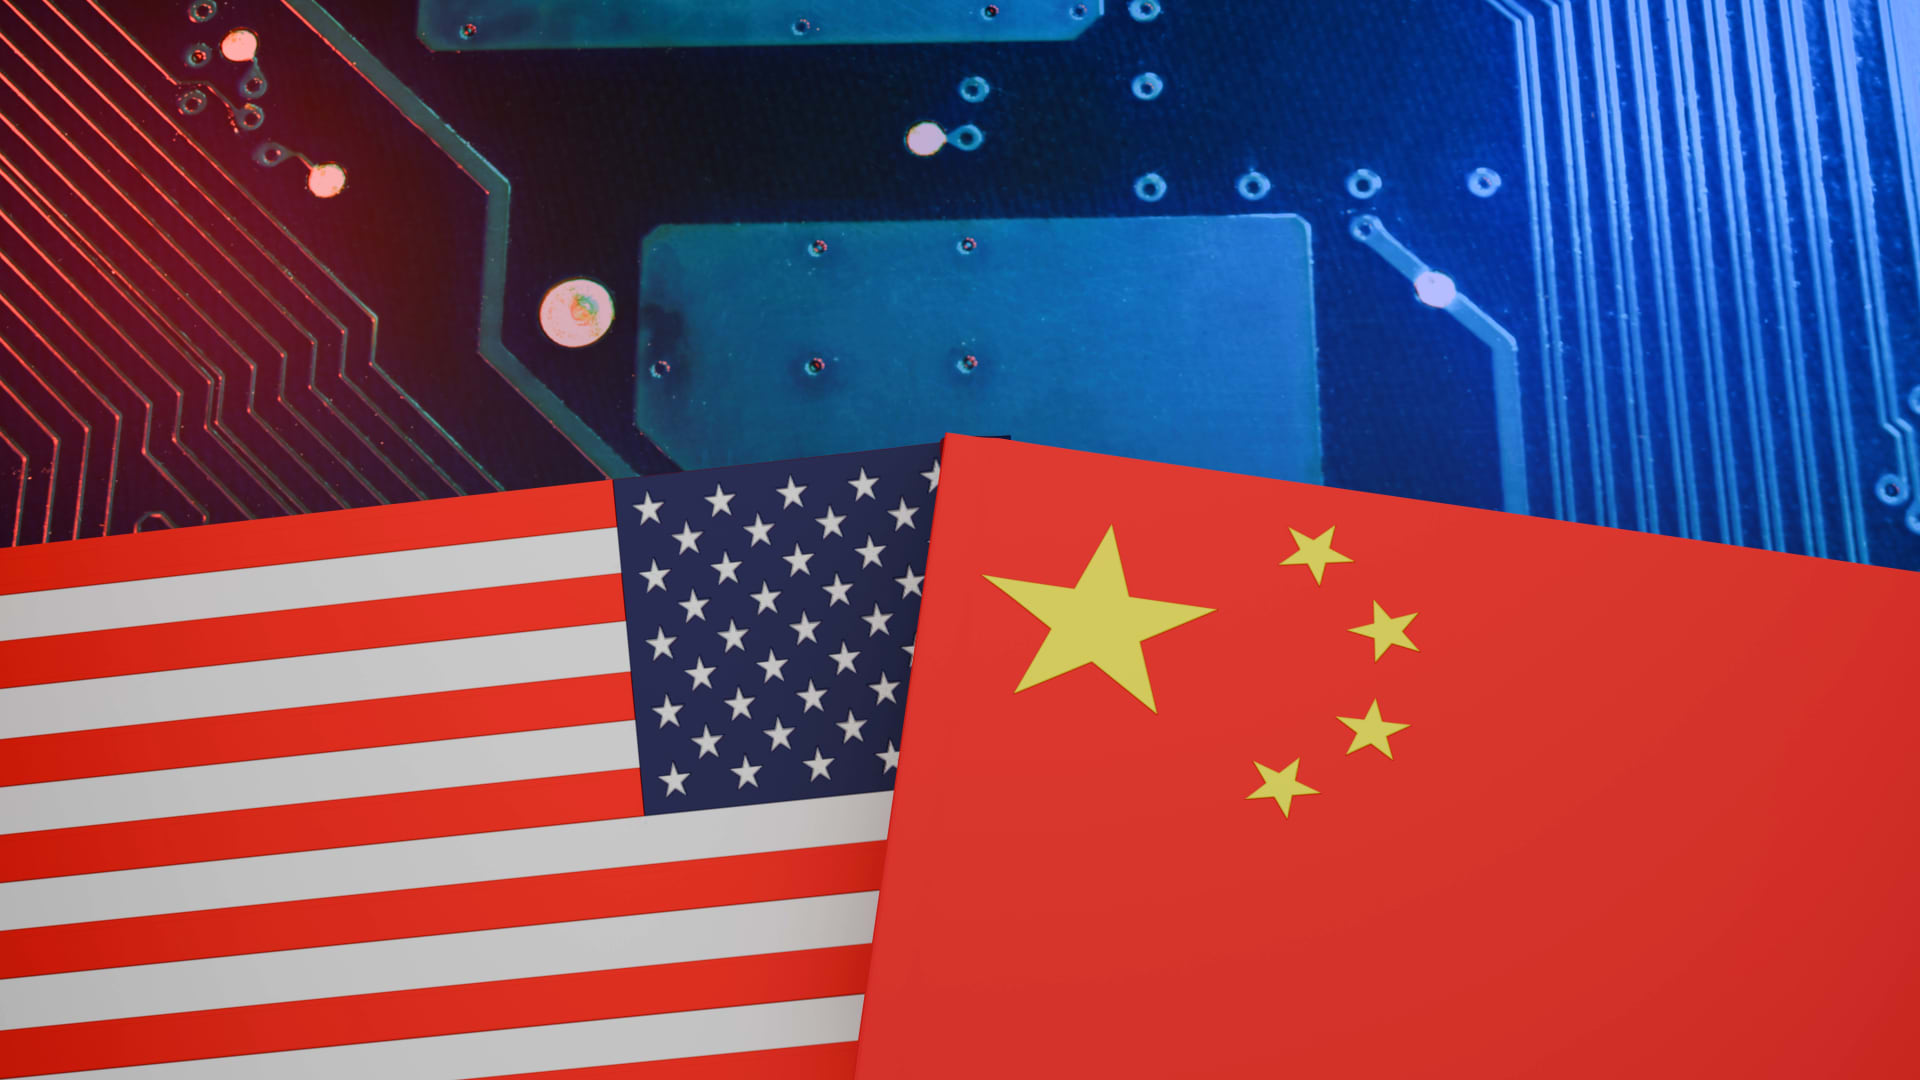 China’s $47.5 billion chip fund will likely focus on AI amid U.S. export curbs, NYU professor says